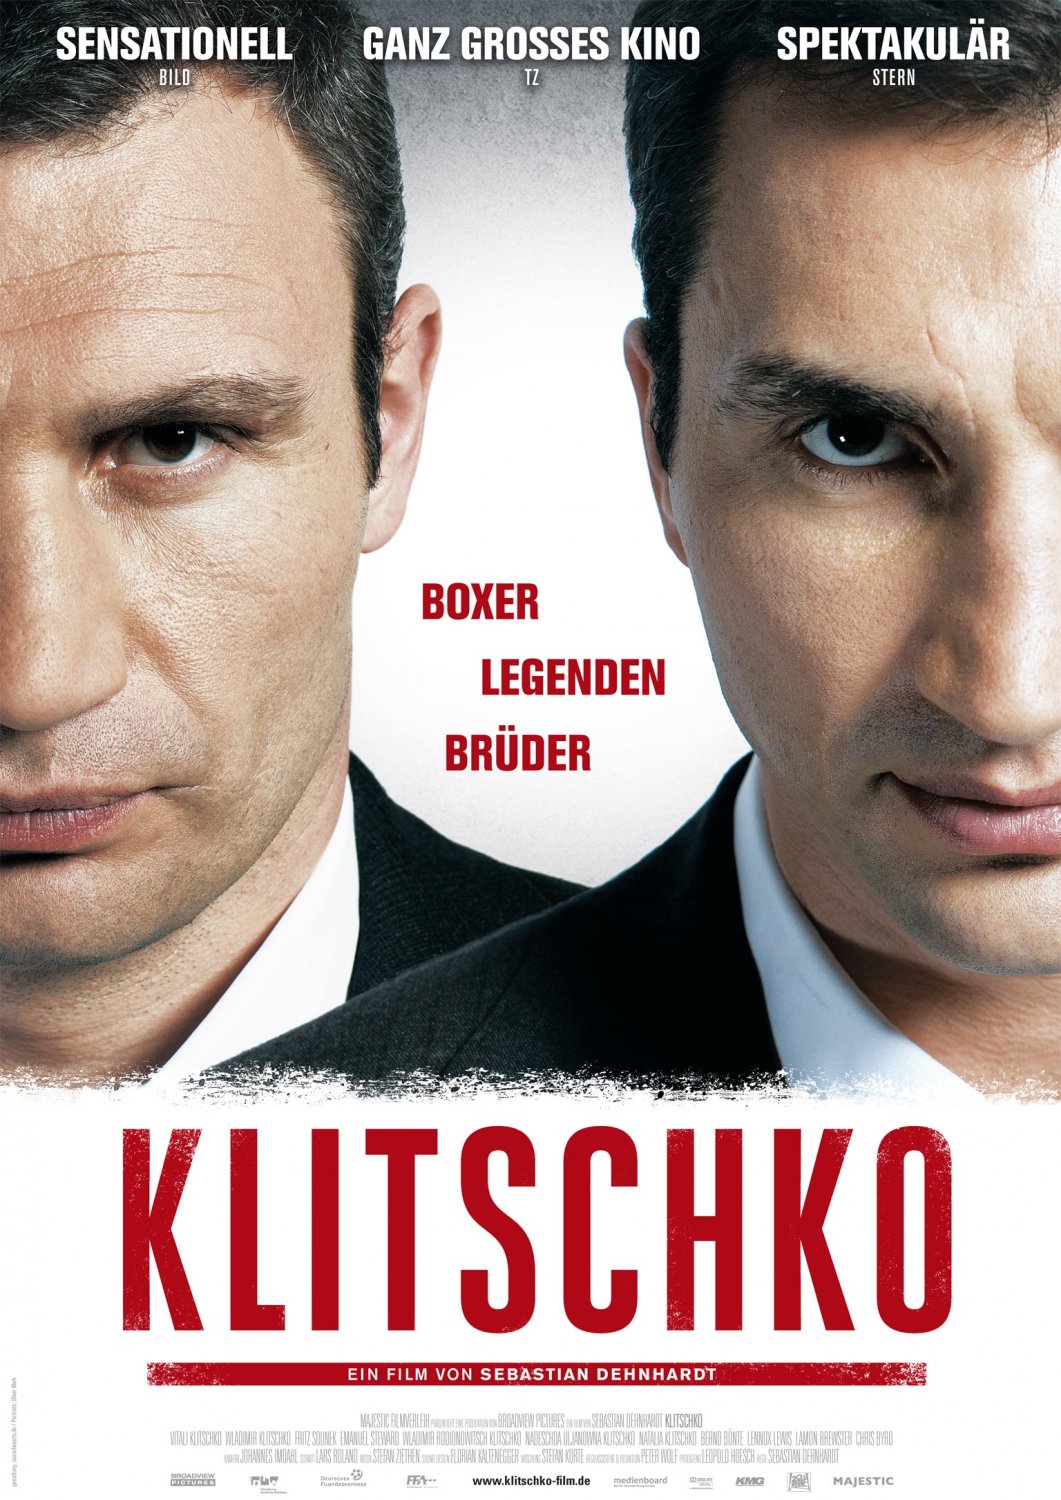 Extra Large Movie Poster Image for Klitschko 